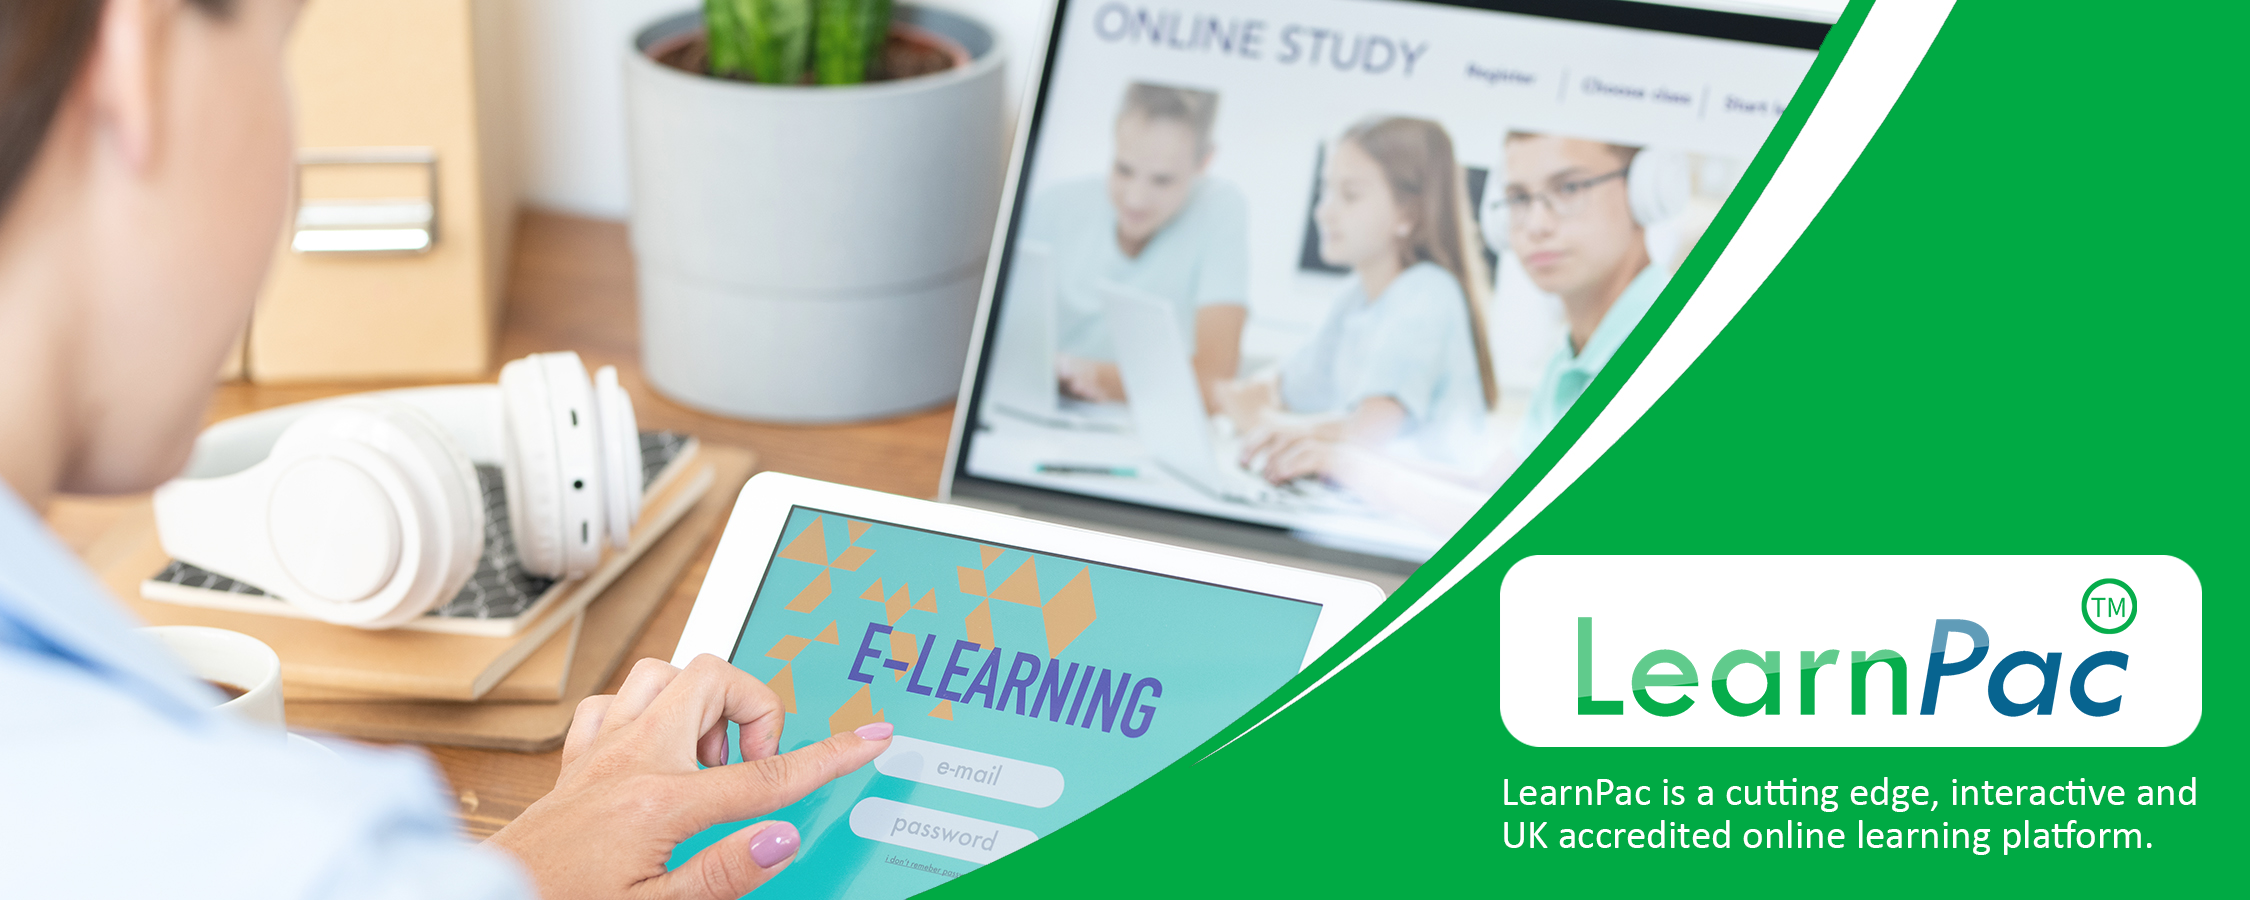 Crisis Management Training - Online Learning Courses - E-Learning Courses - LearnPac Systems UK -